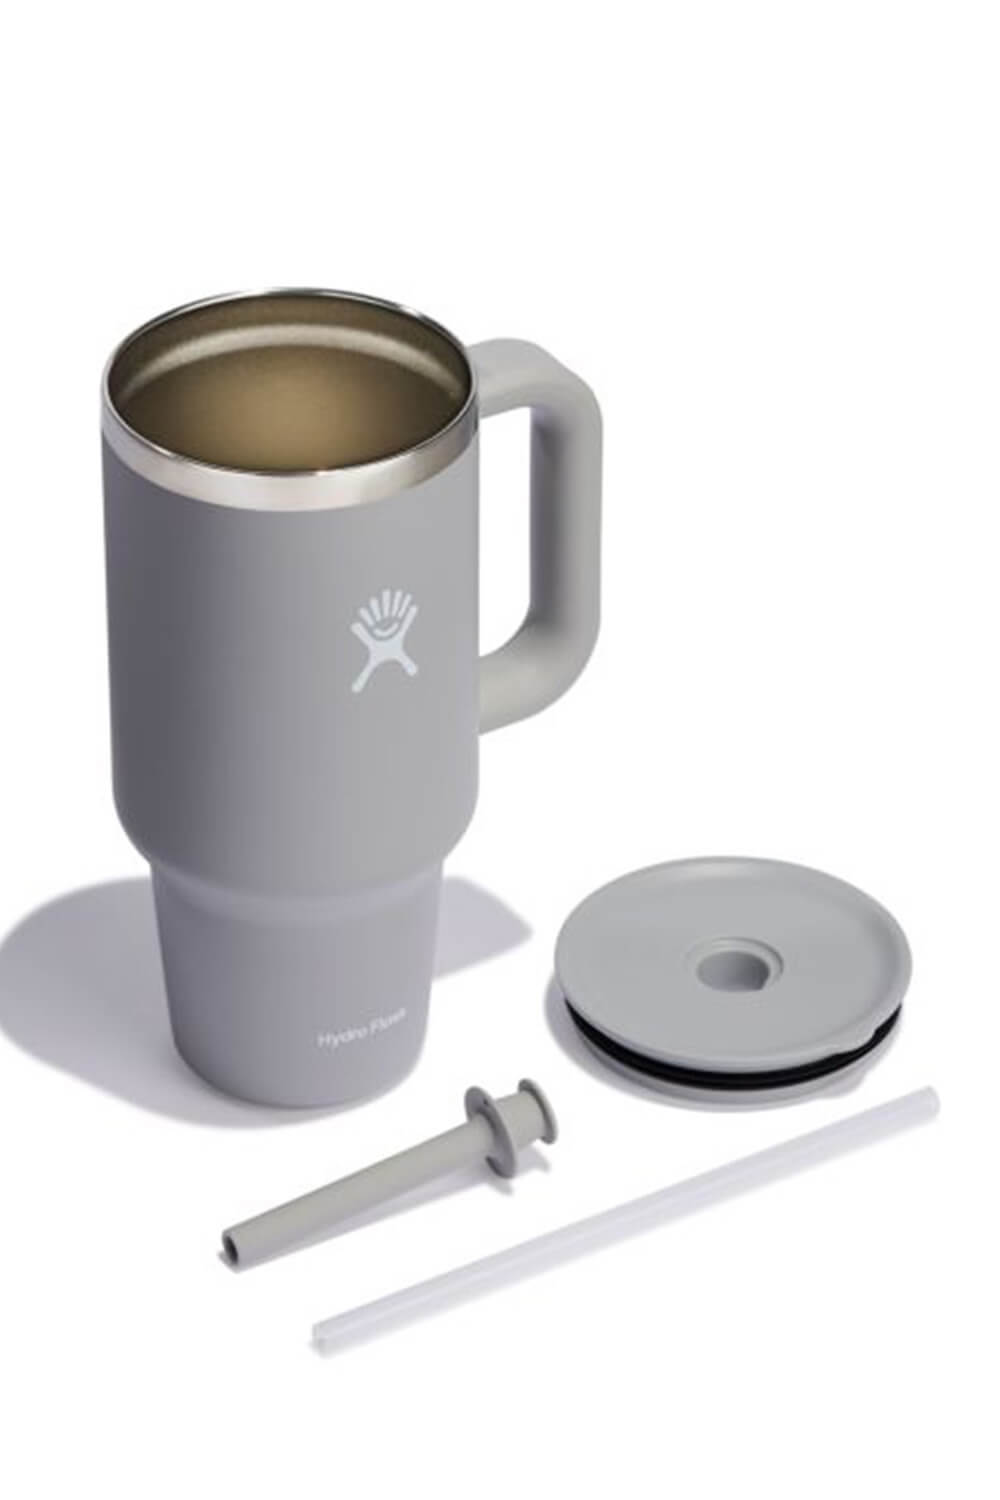 Hydro Flask 12 oz Travel Coffee Mug - Stainless Steel  